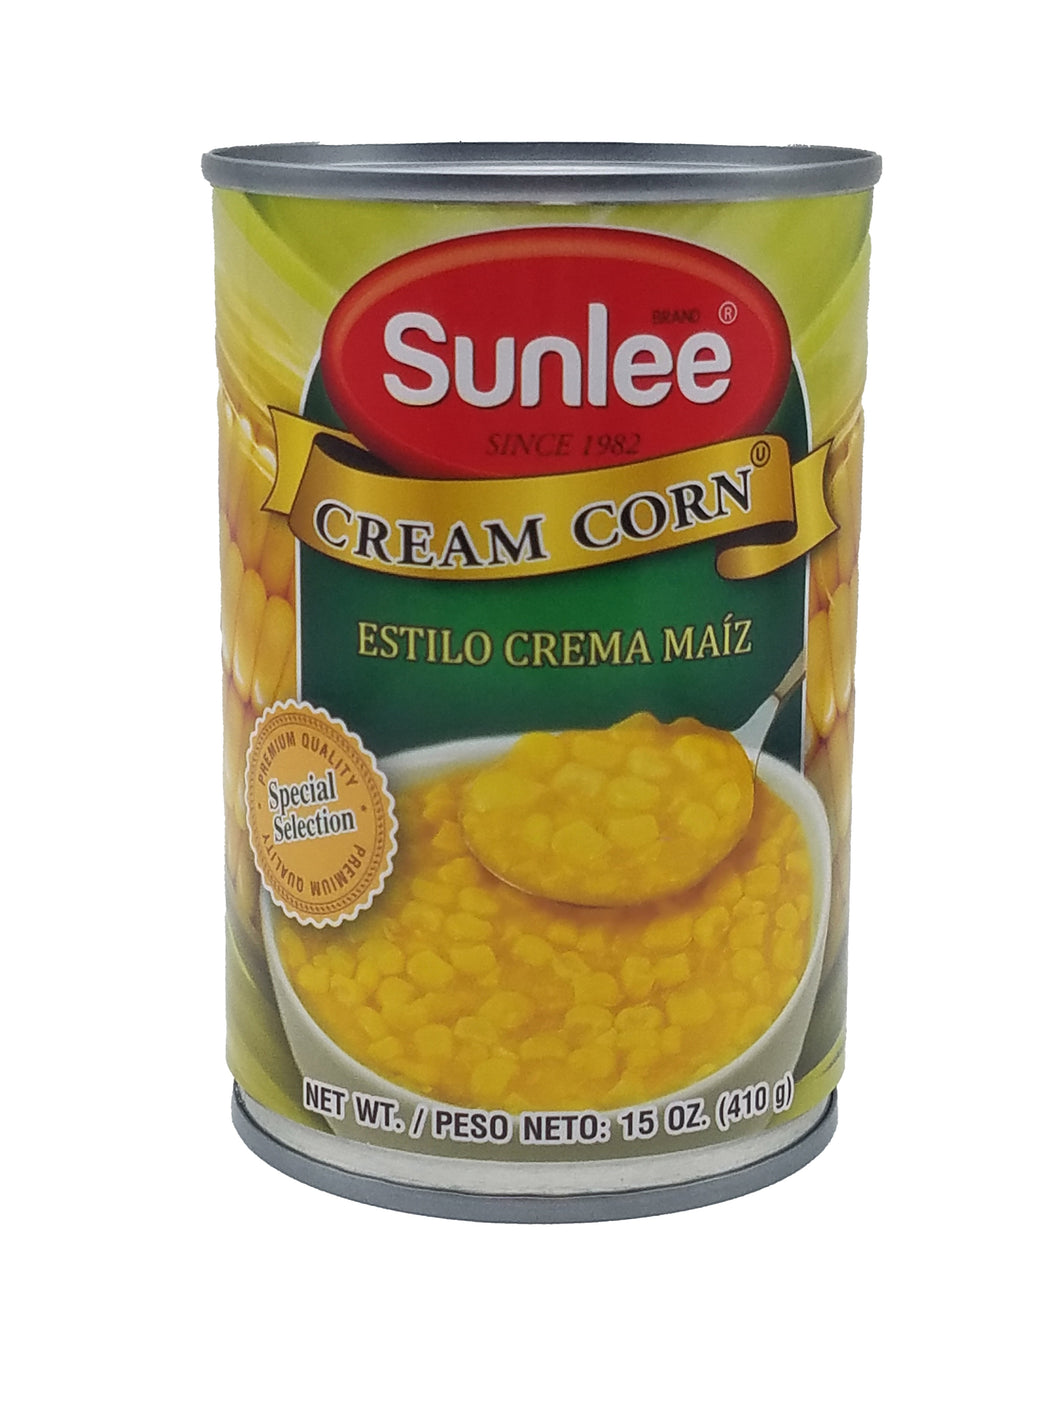 Sunlee Cream Corn